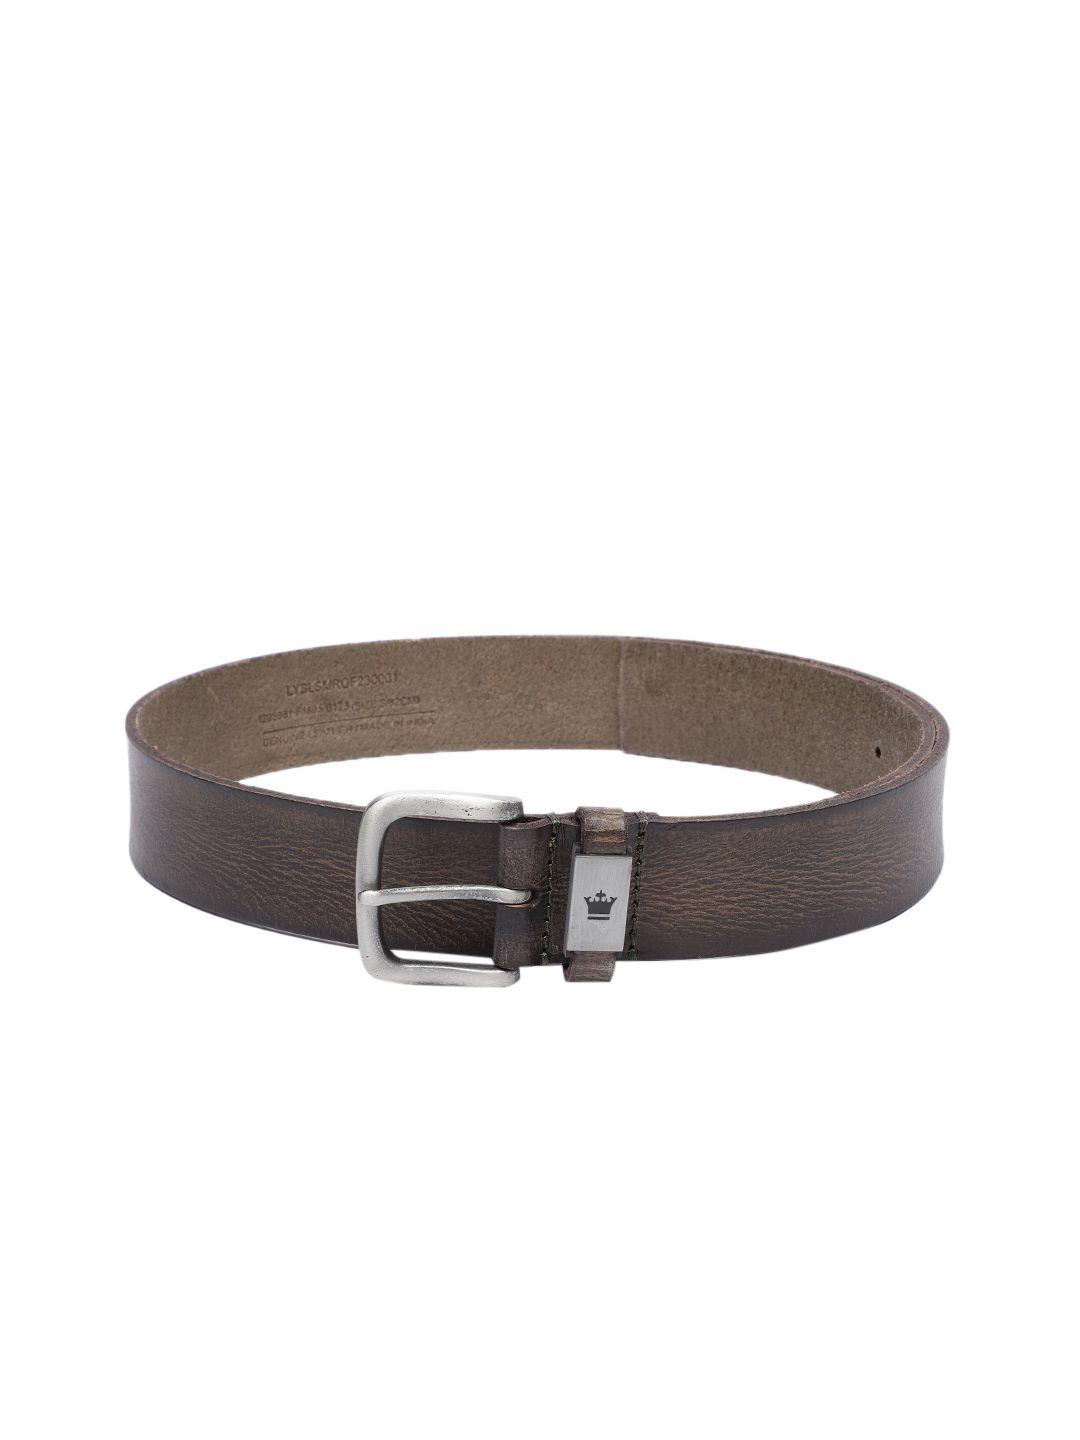 louis philippe sport men solid leather belt